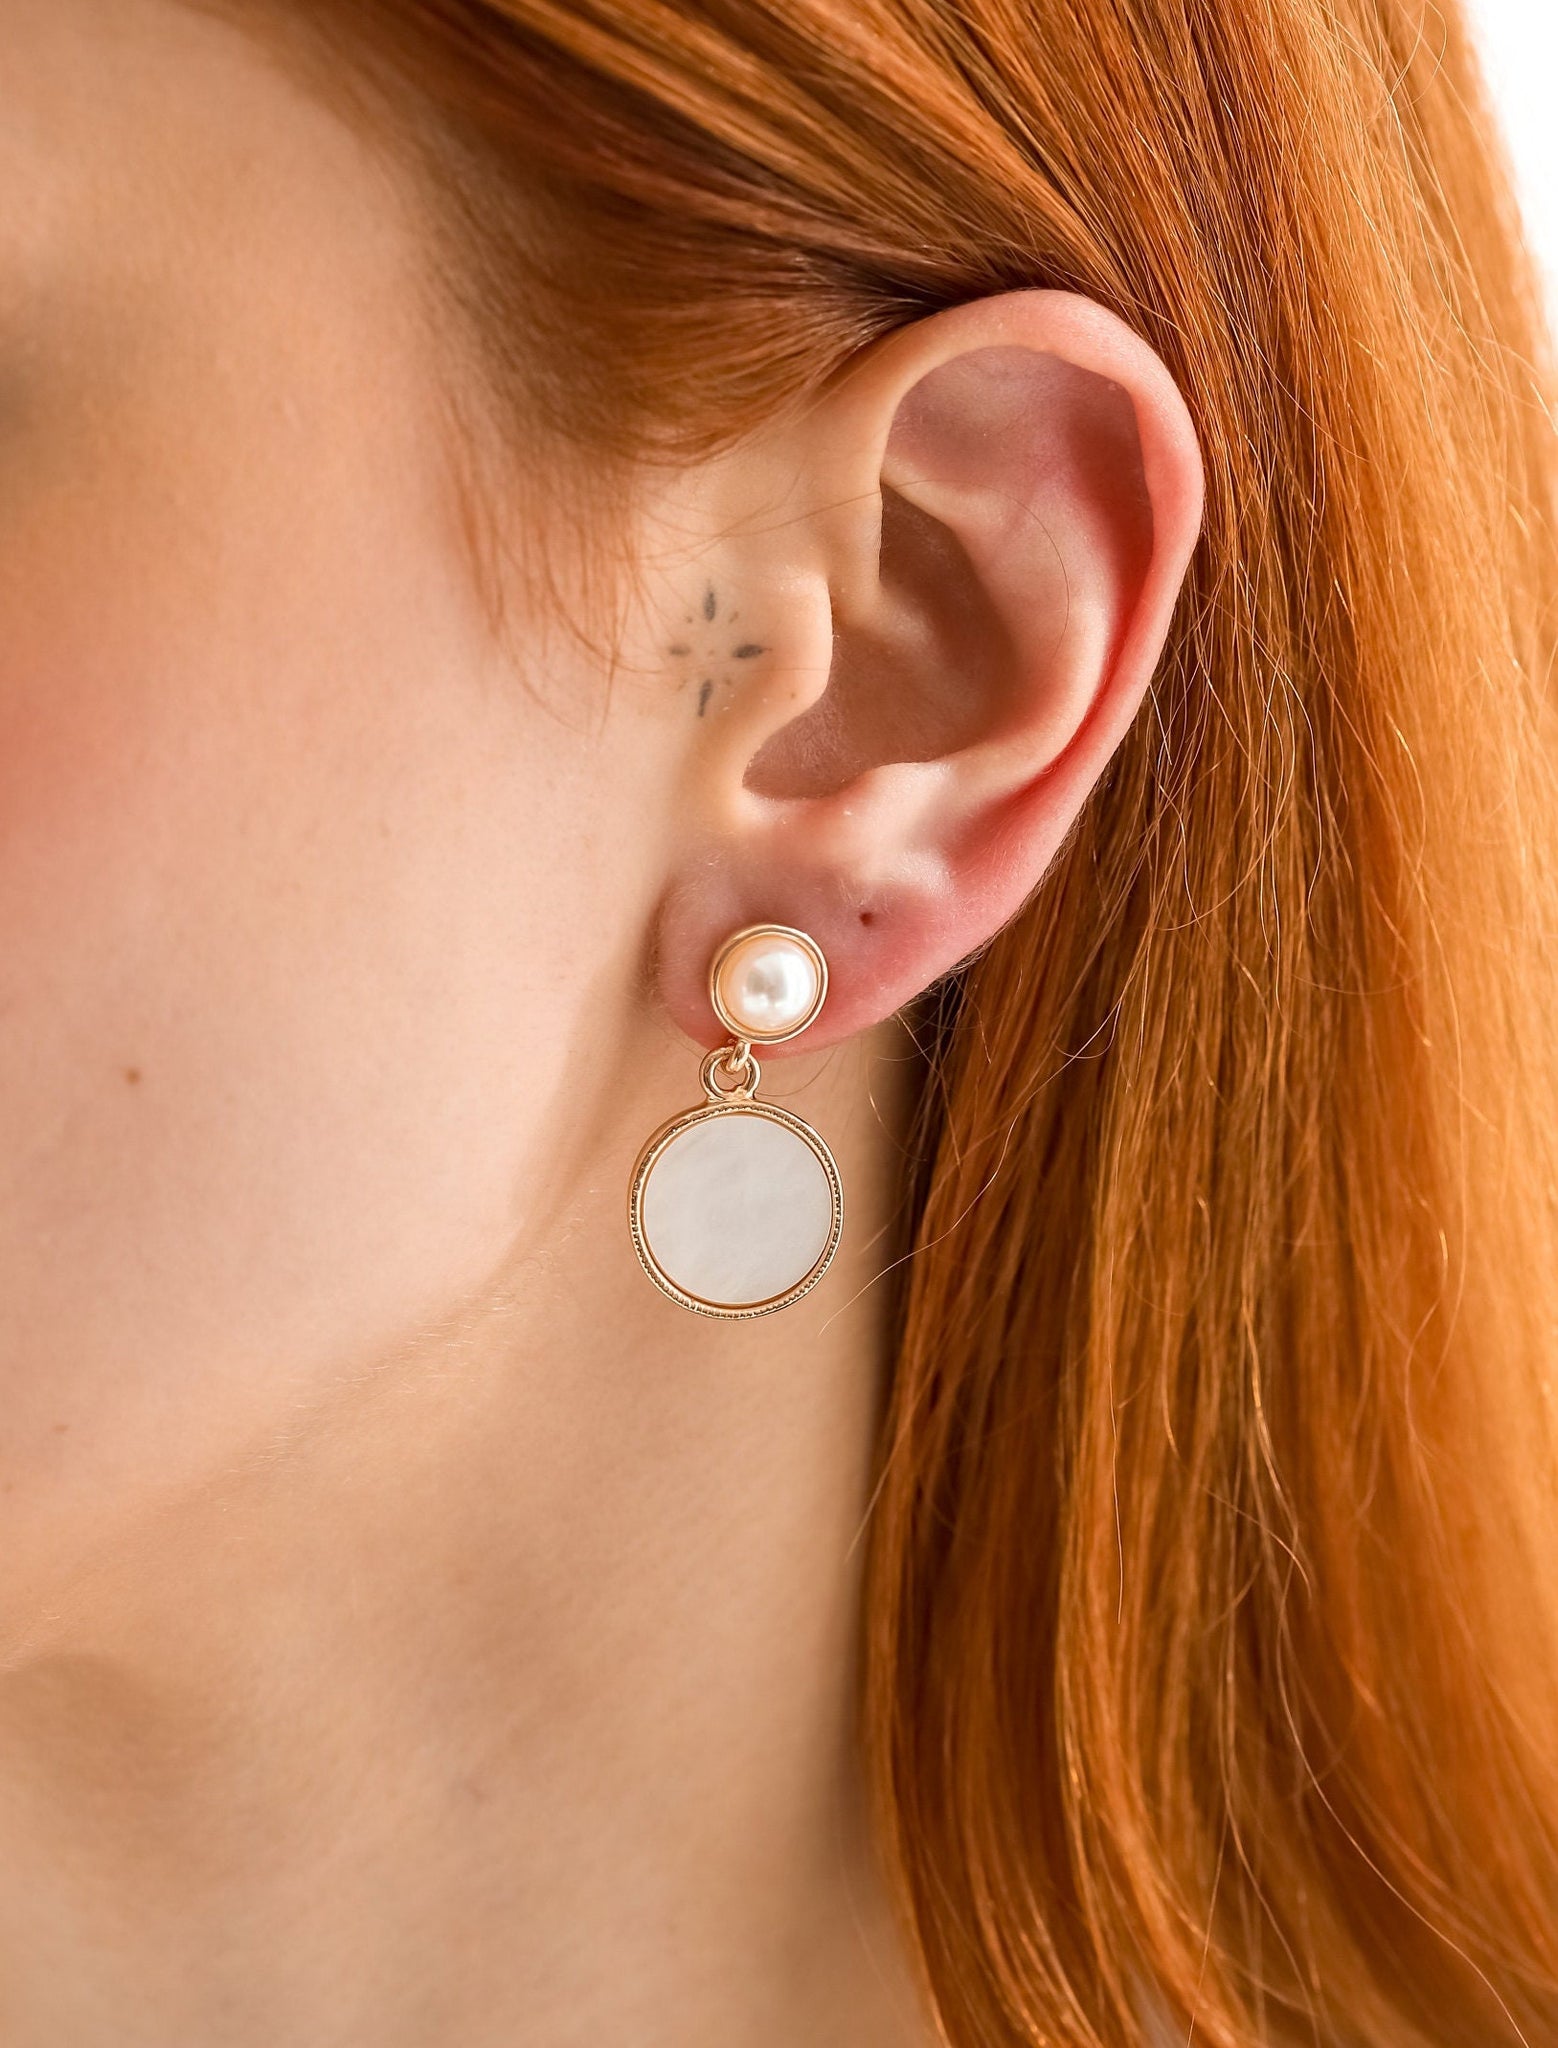 White Shell Stud Earrings, 18K Gold, Fresh Water Pearl Earrings, Minimalist Earrings, Gifts For Her, Pearl Drop Earrings,Bridesmaid Earrings